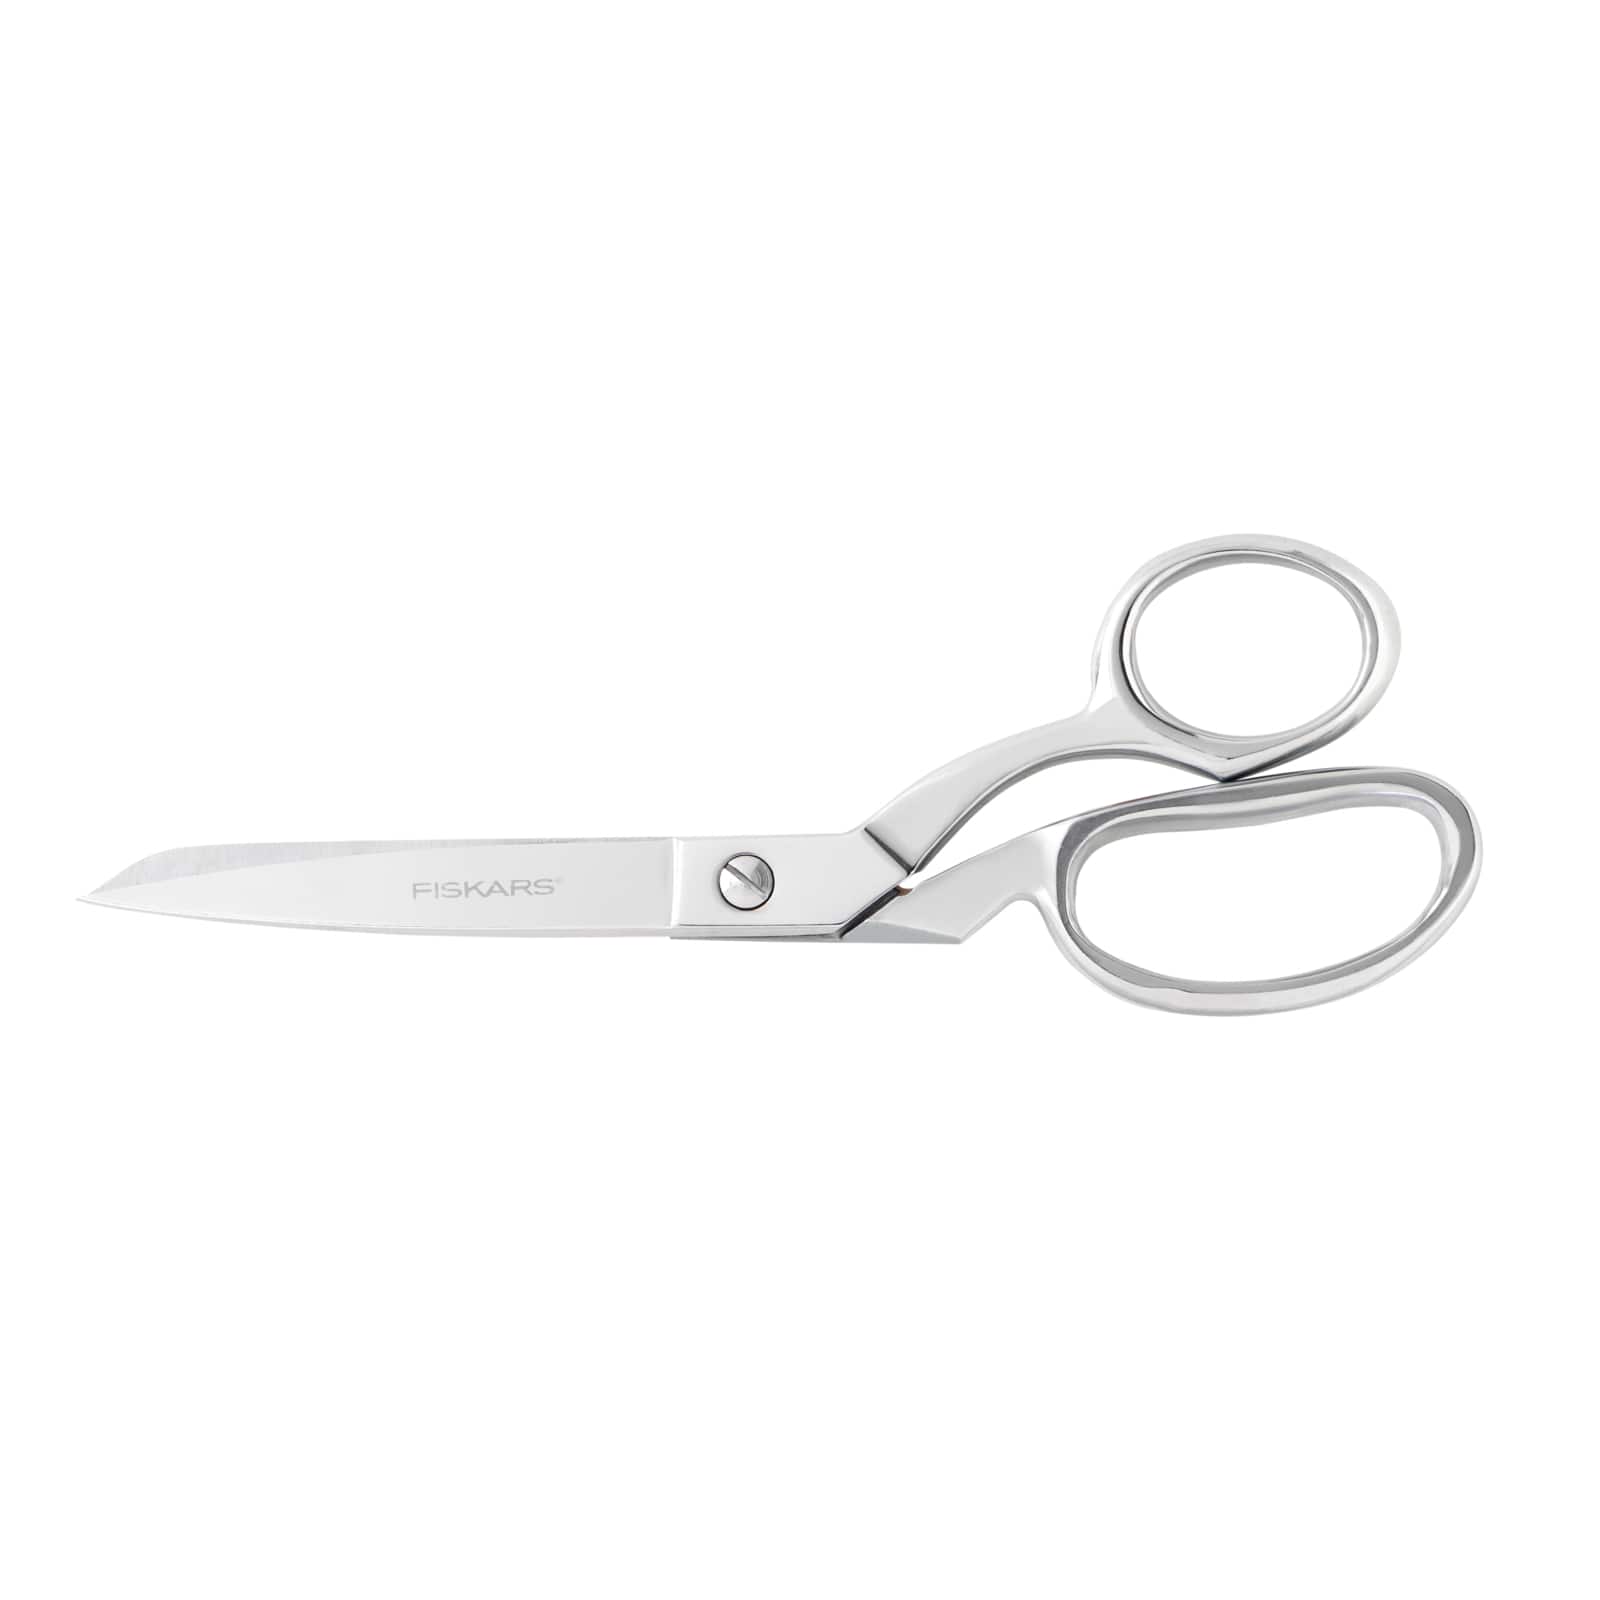 Fiskars Scissors, Ultimate Multi-Purpose, 9 Inch